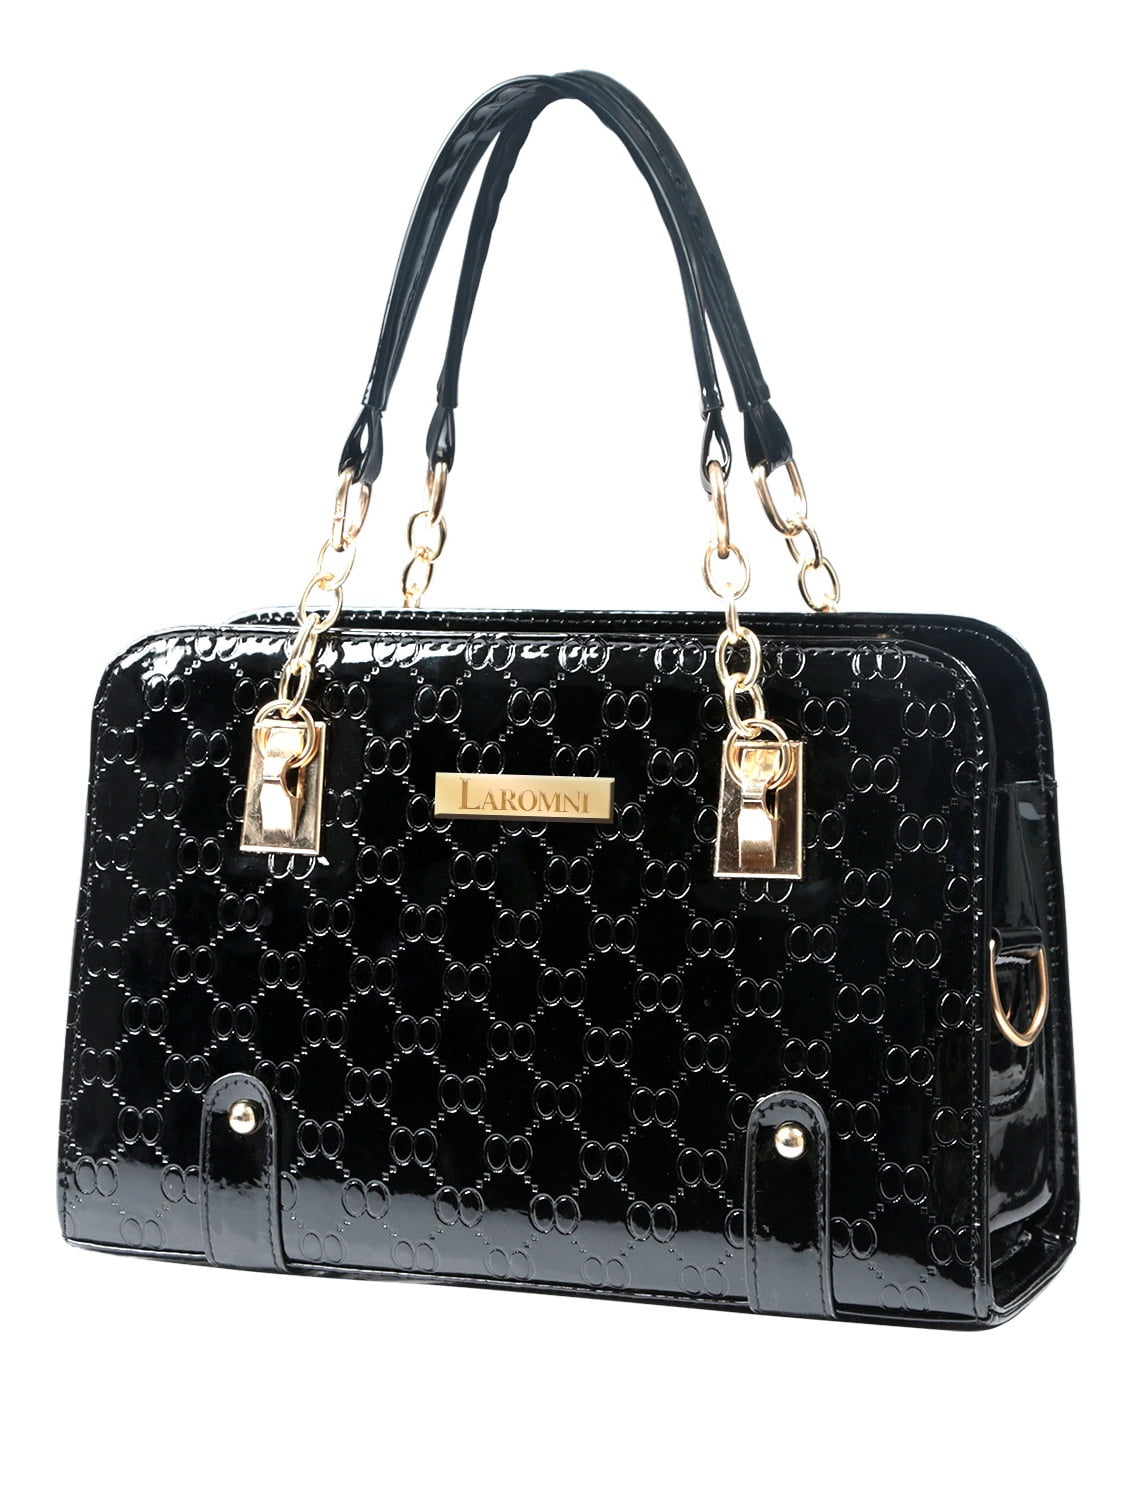 Ibfun Handbags for Women PU Leather Satchel Purse Ladies Shoulder Bags Top Handle Tote Black